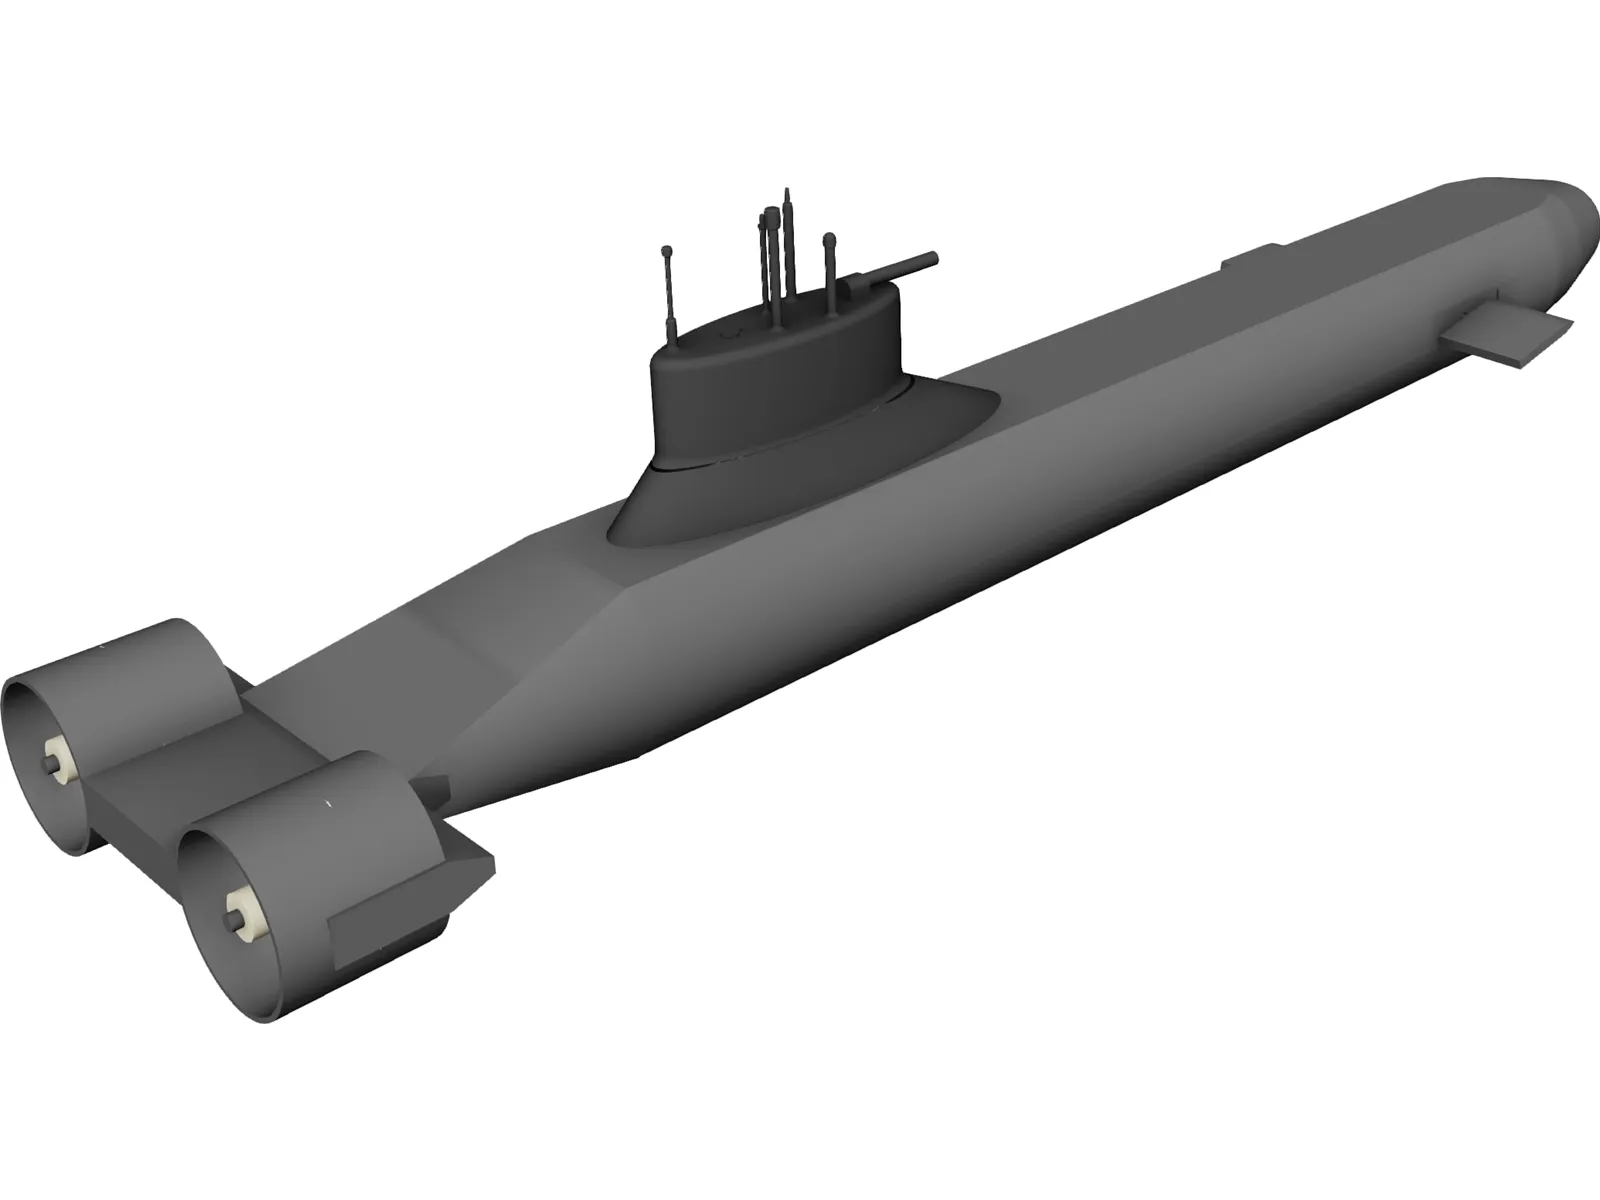 Typhoon Submarine 3D Model